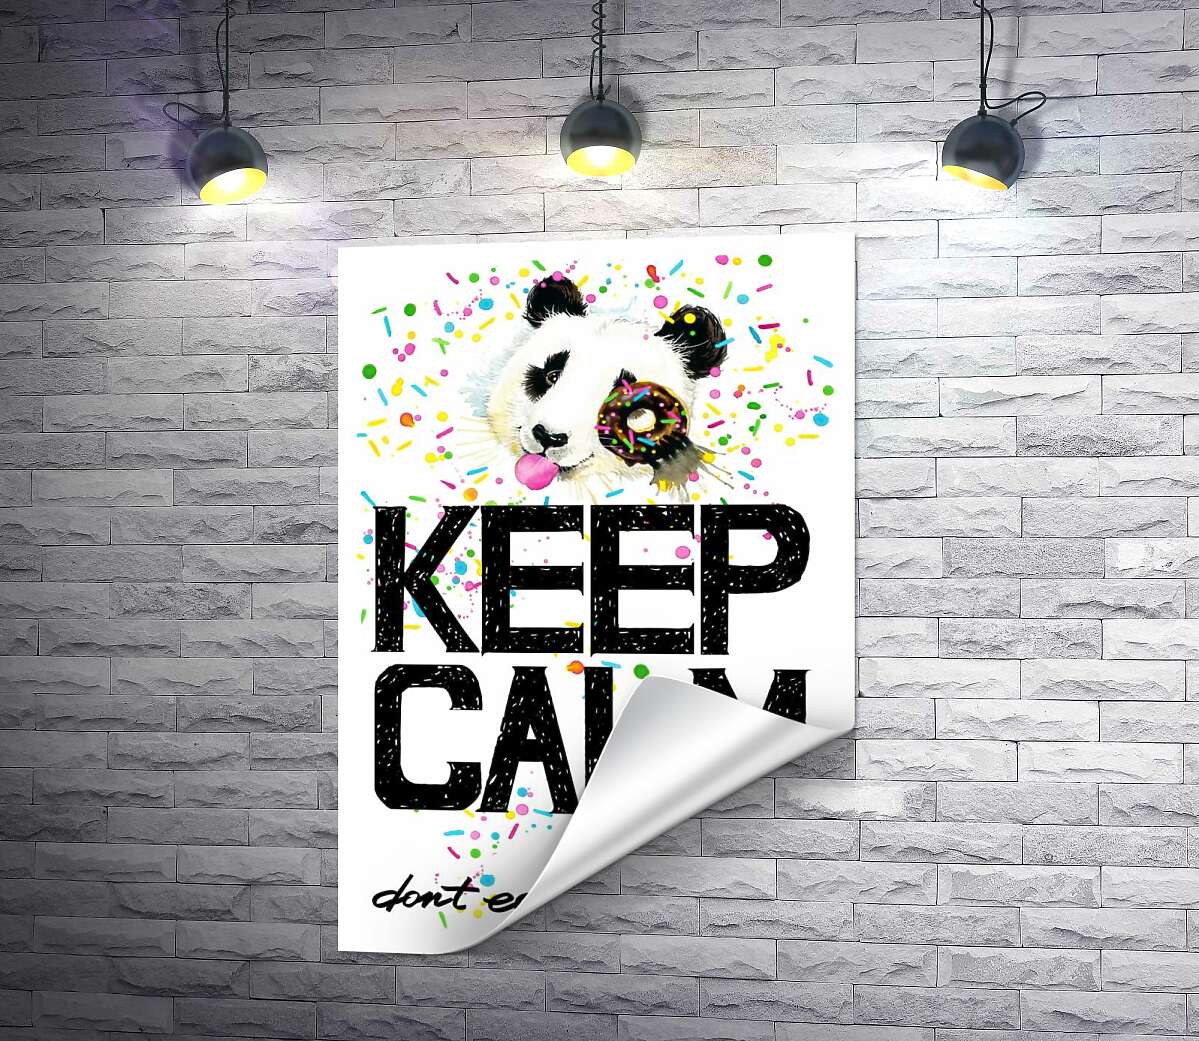 печать Панда с мягким донатсом над надписью "keep calm and don't eat after 6 p.m."